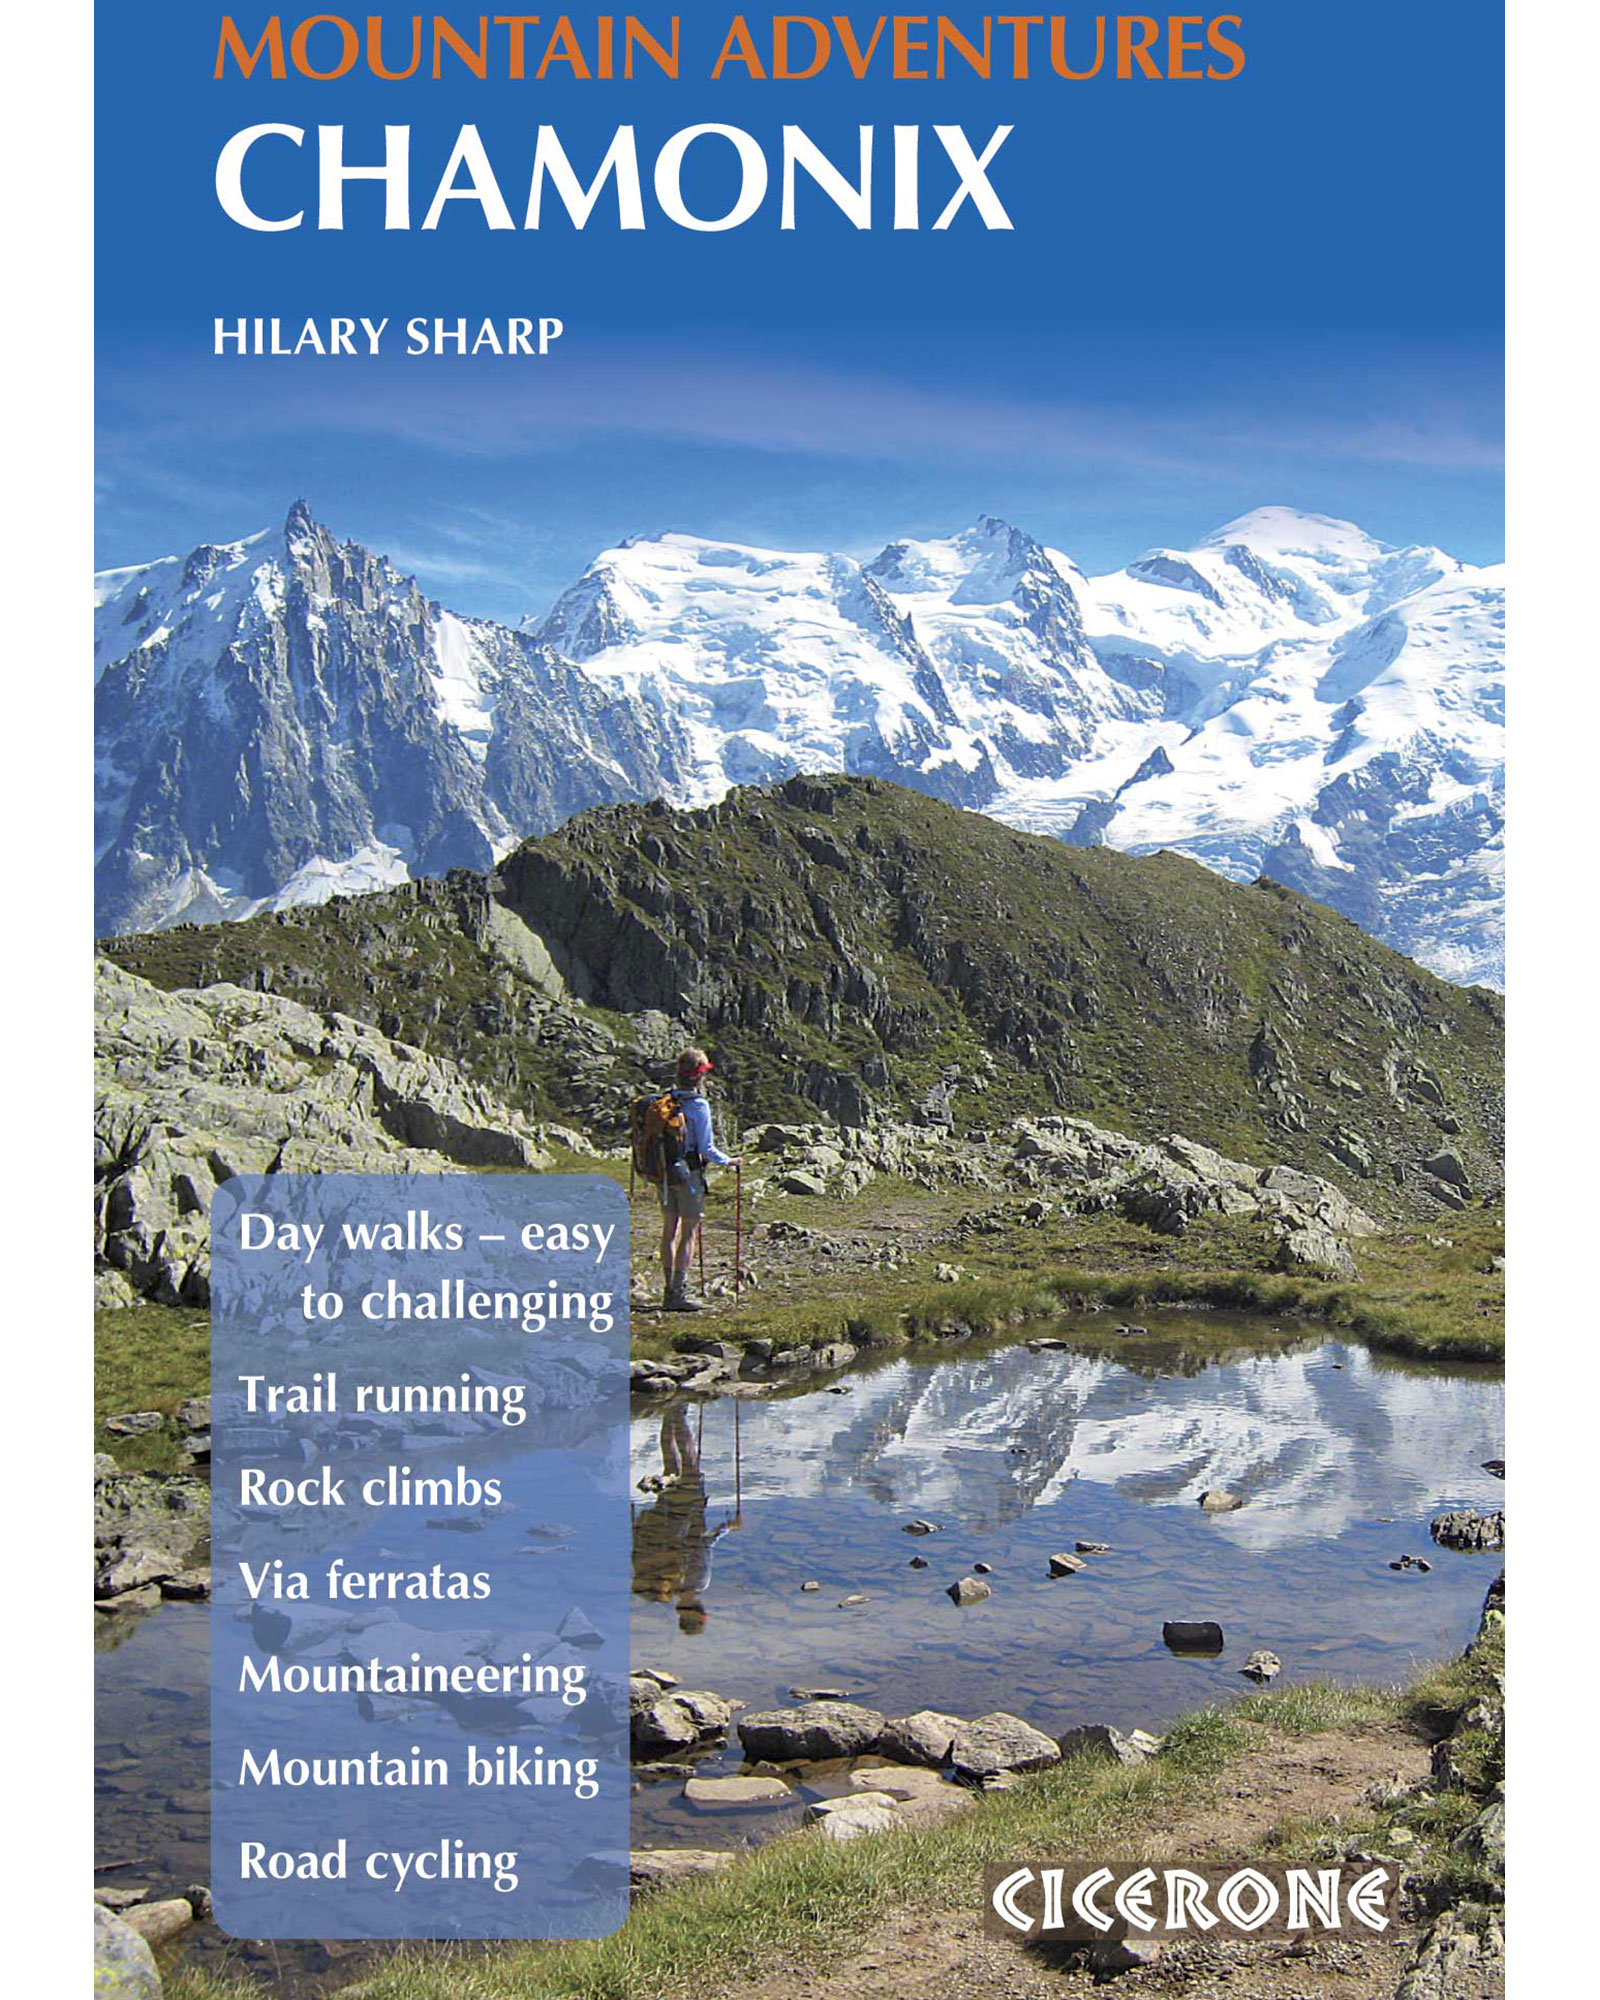 Cicerone Chamonix Mountain Adventures Guide Book